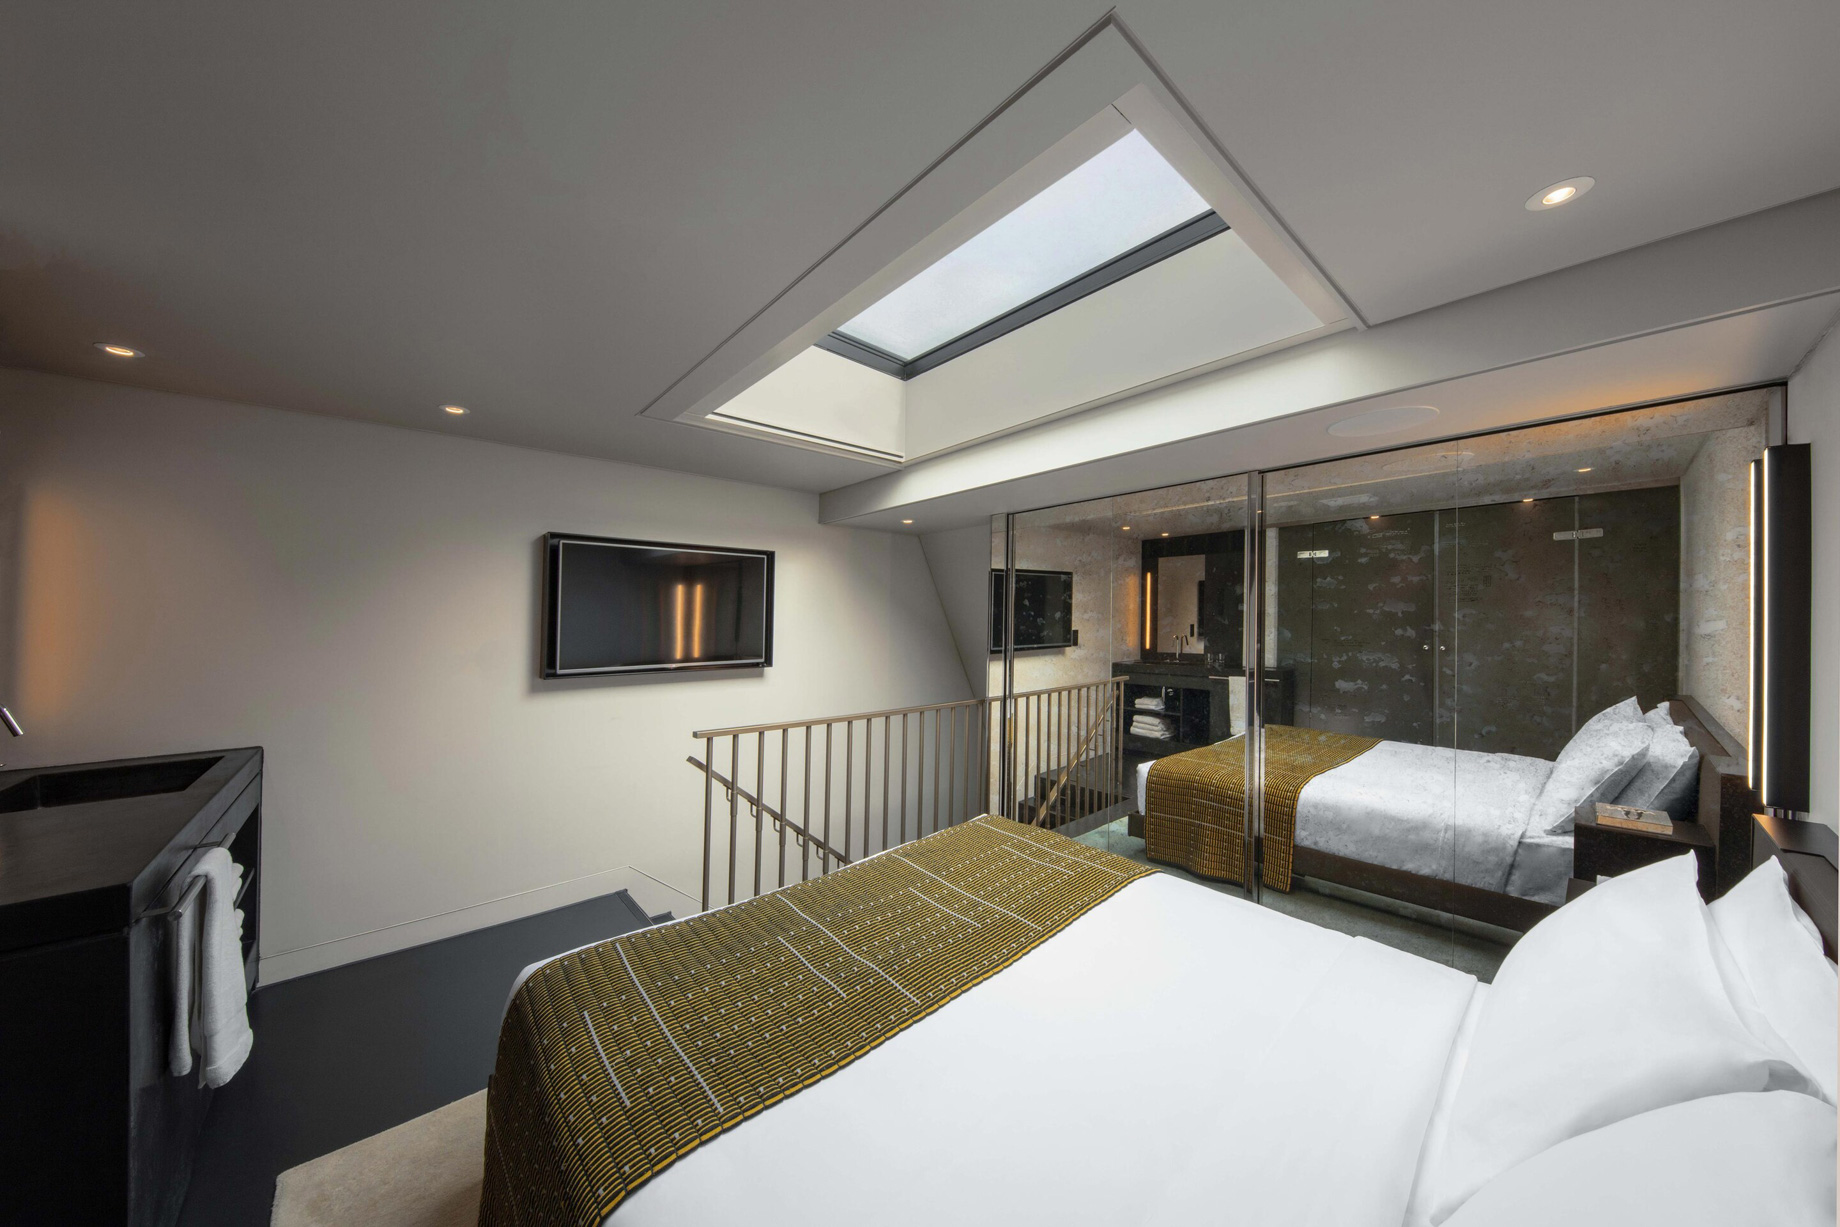 W Amsterdam Hotel – Amsterdam, Netherlands – Marvelous Bank One Bedroom Bi Level Loft Skylight